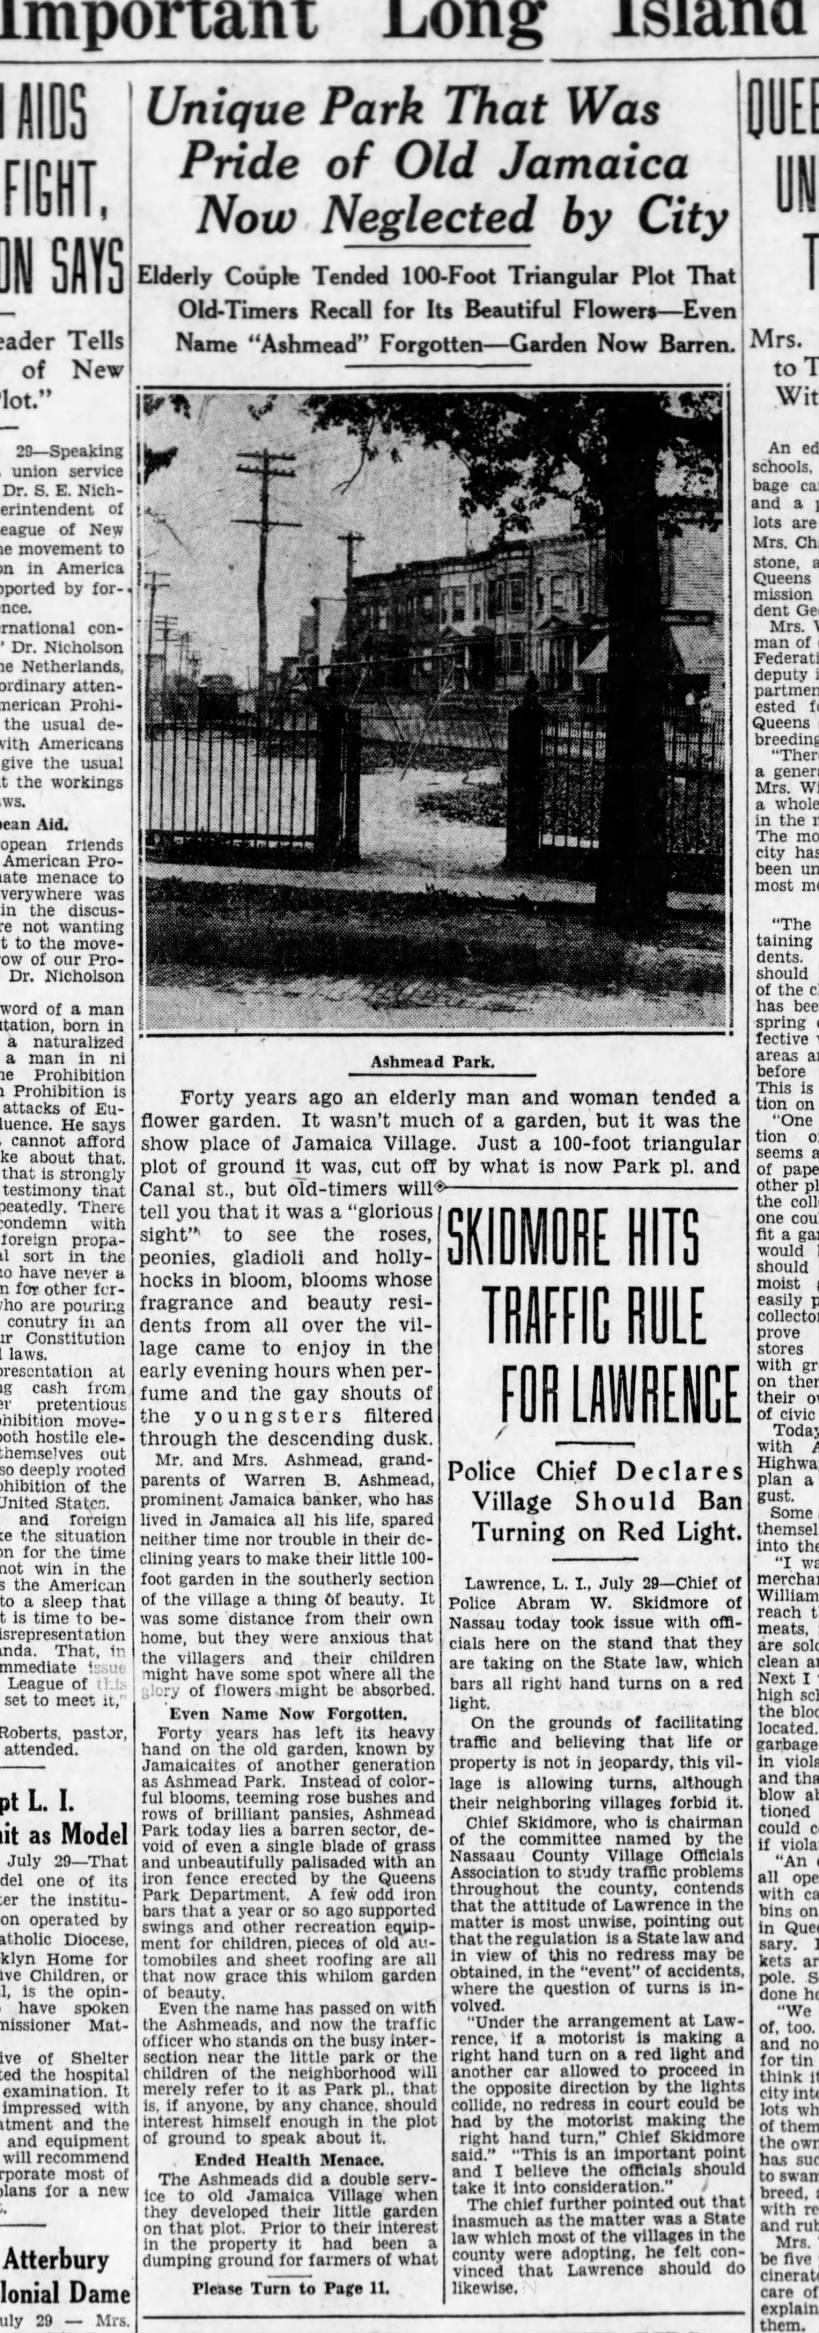 Ashmead Park July 29, 1929 Jamaica,
Brooklyn Daily Eagle